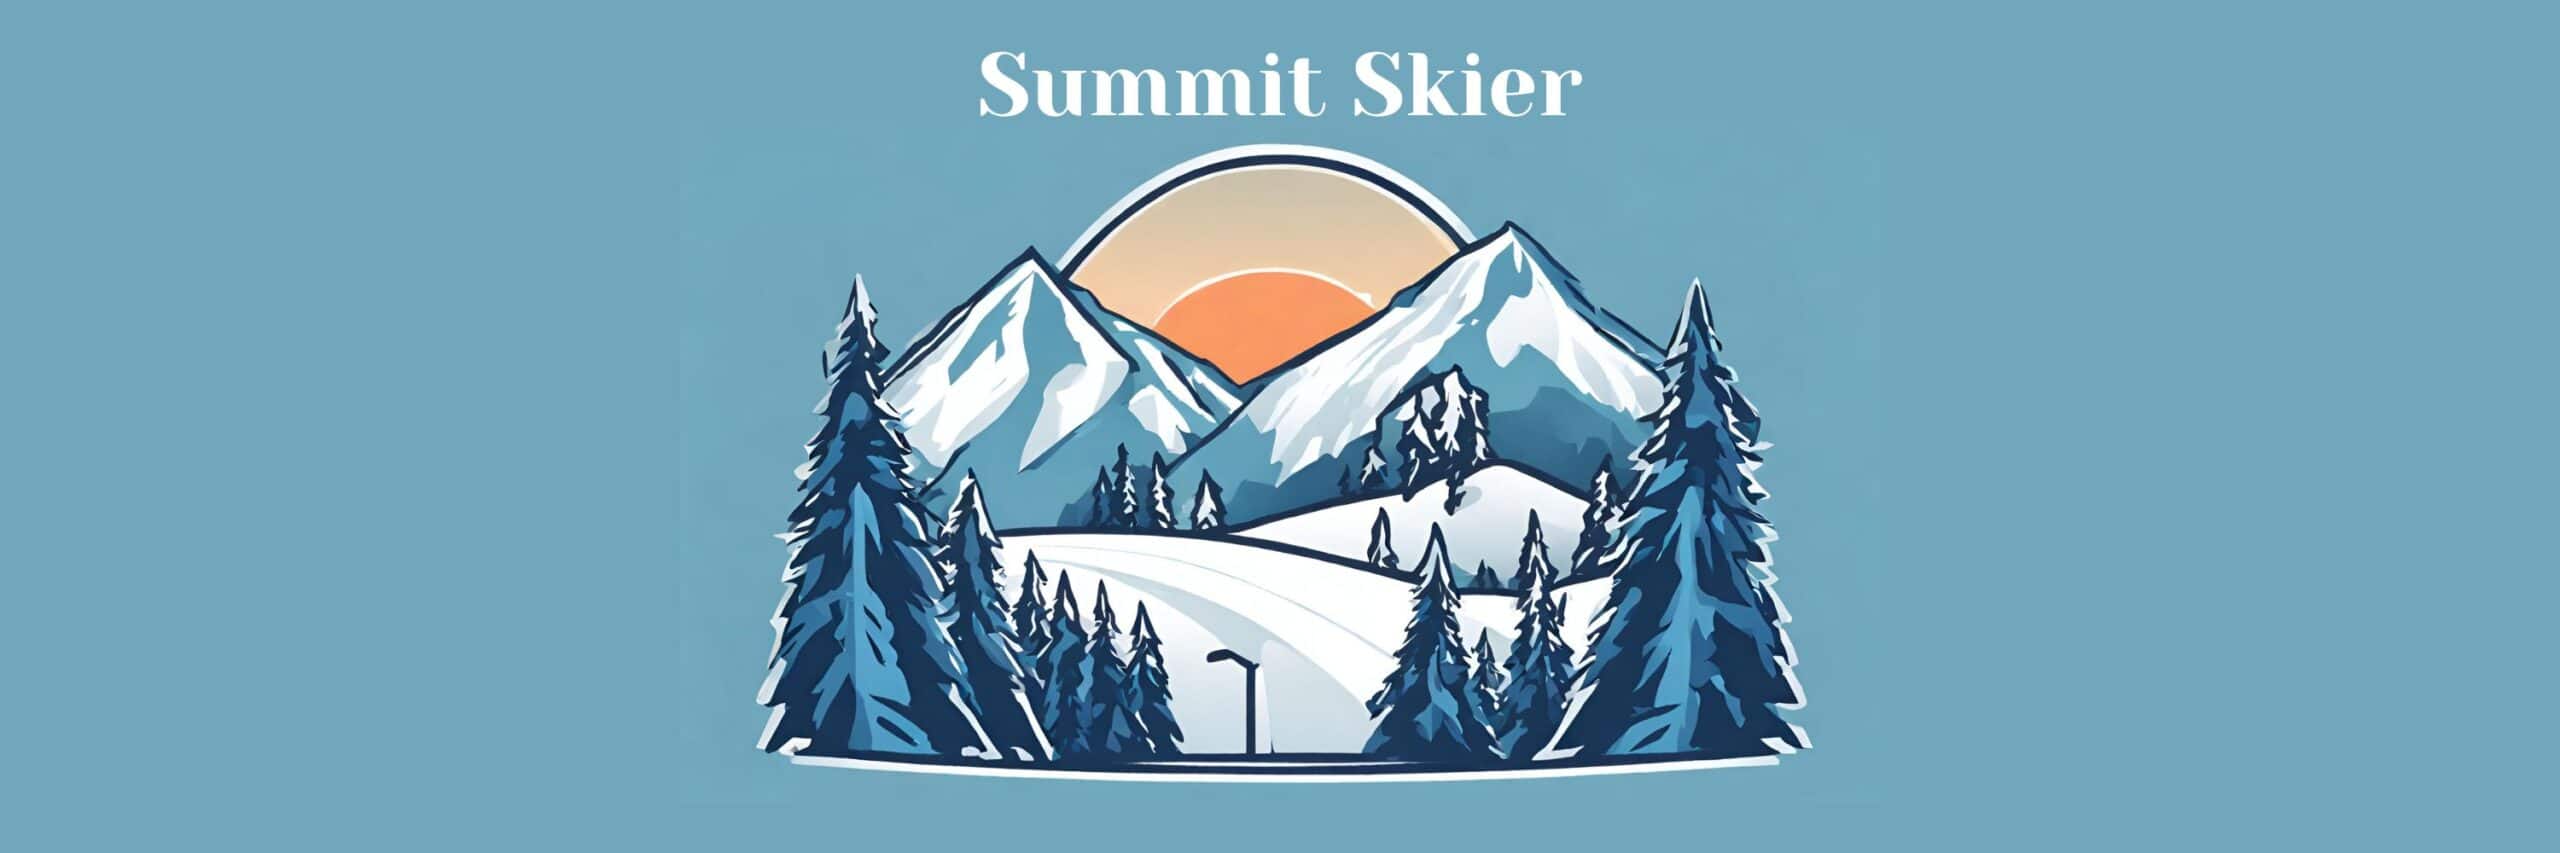 Summit Skier Custom Graphic